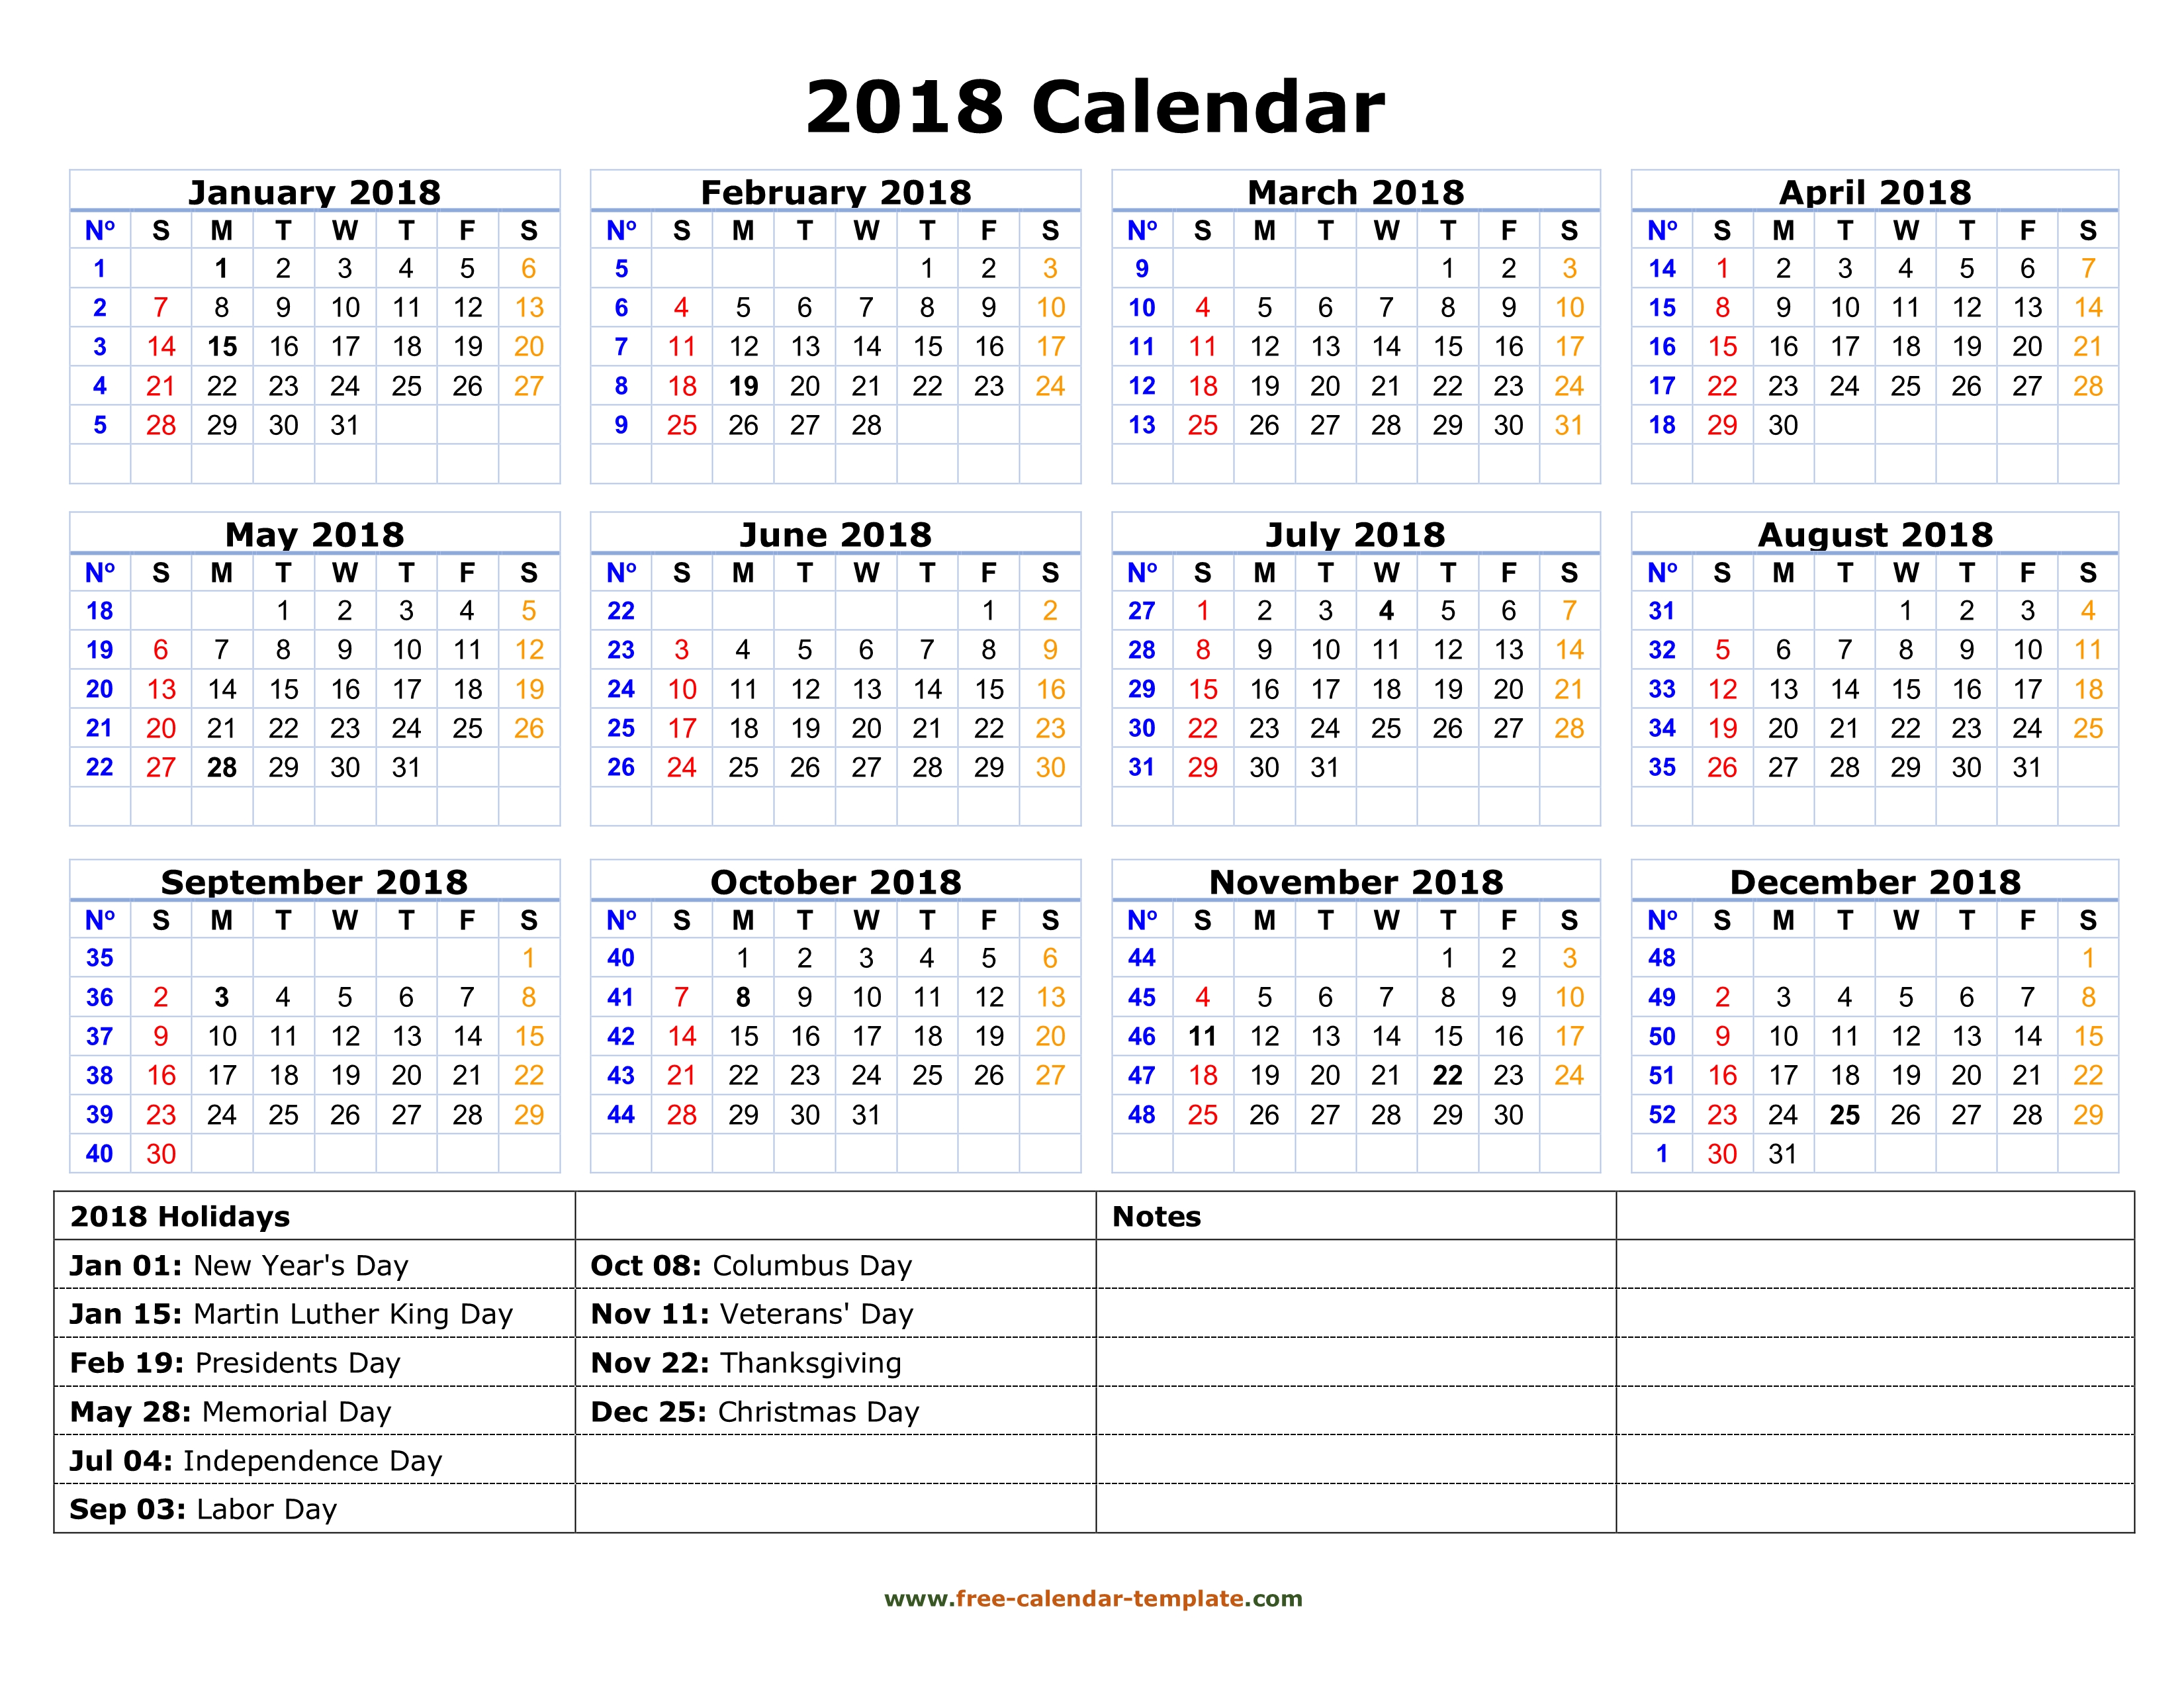 2018 Calendar Year With Holidays